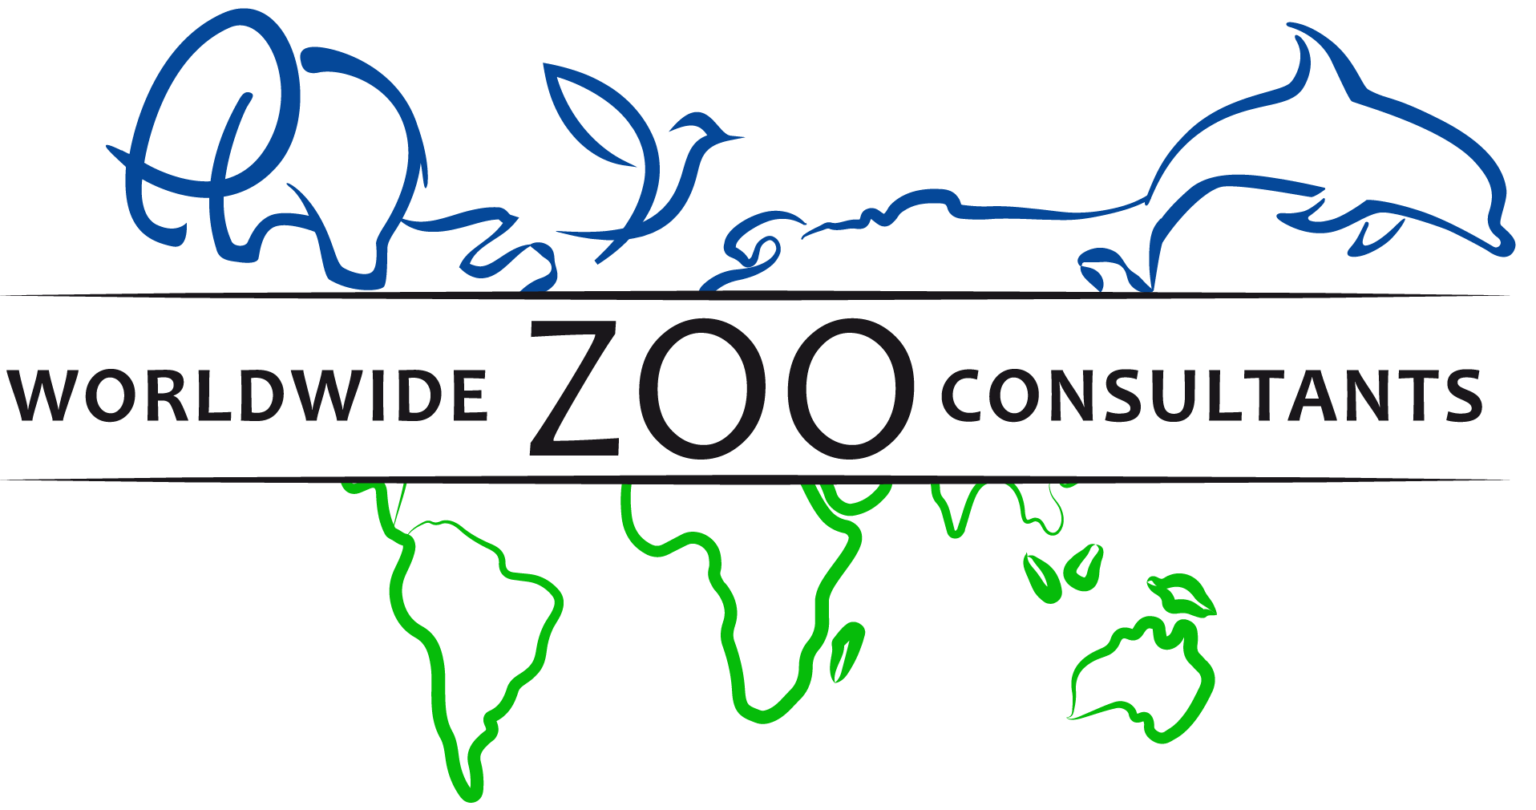 Worldwide Zoo Consultants